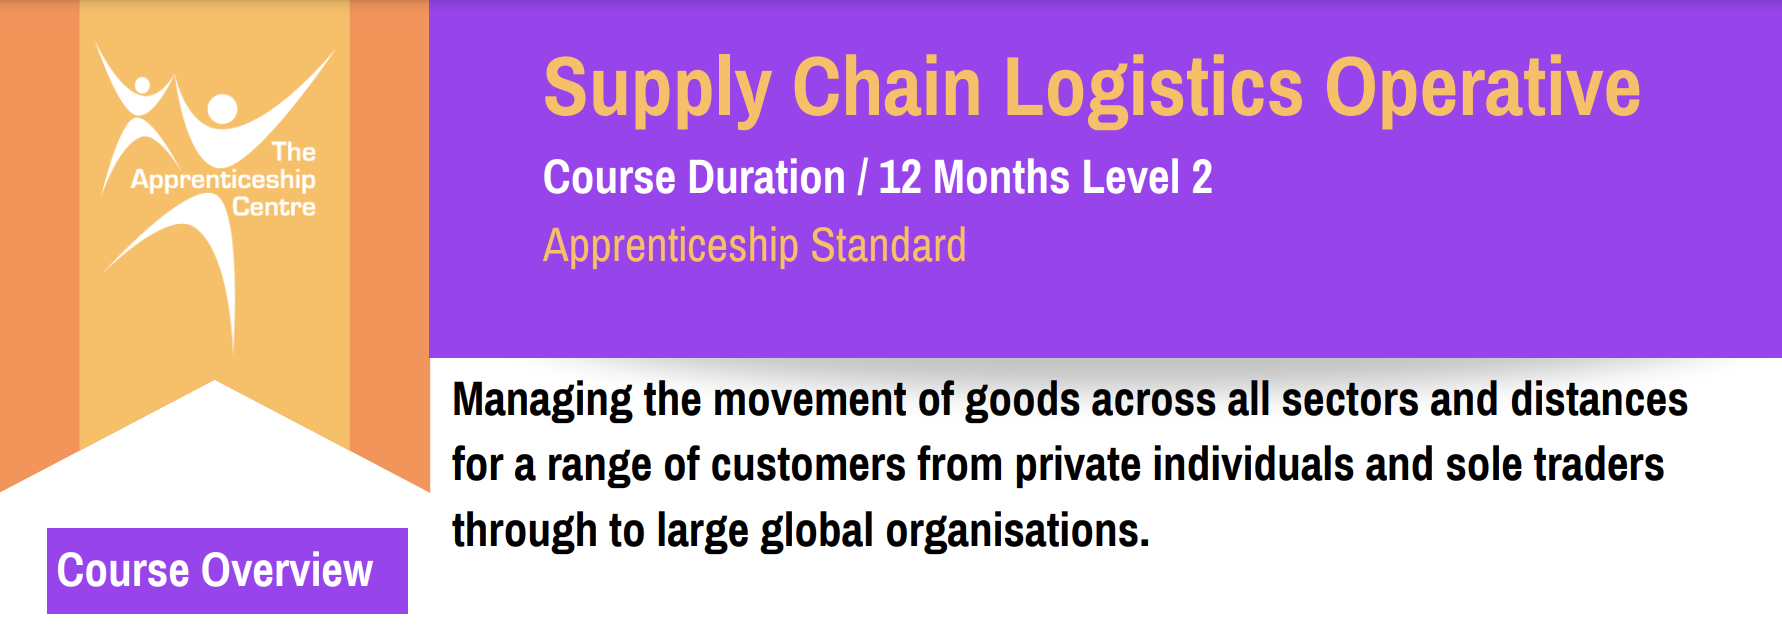 Supply Chain Logistics Operative Level 2